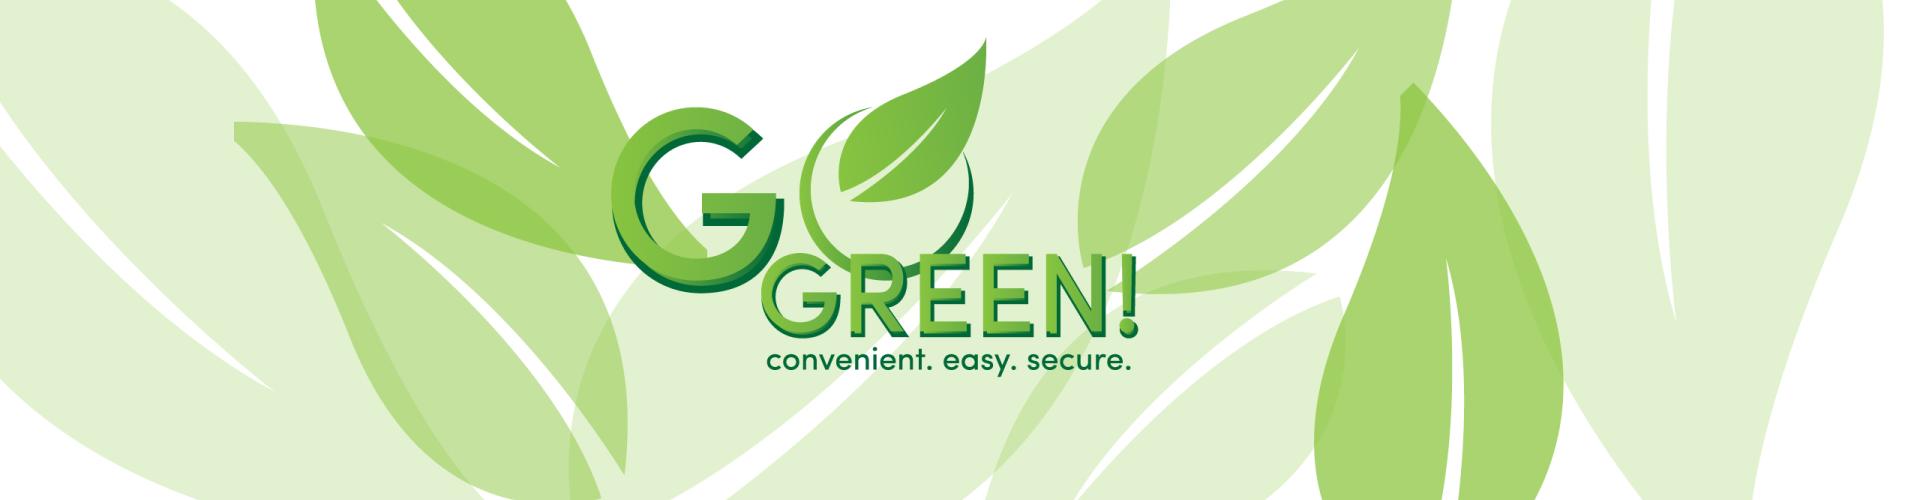 Go Green with eStatements!